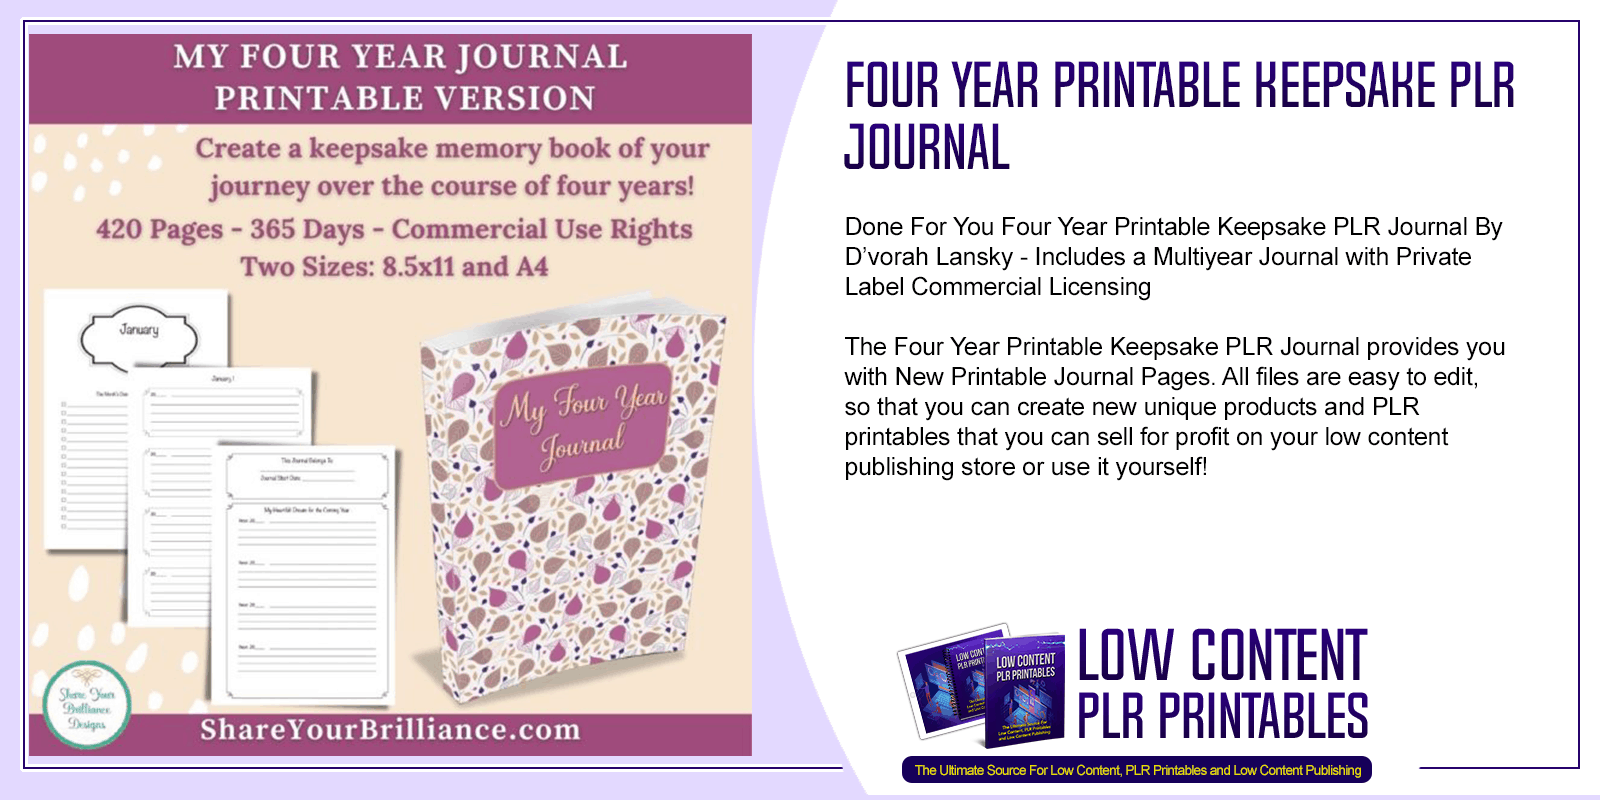 Four Year Printable Keepsake PLR Journal